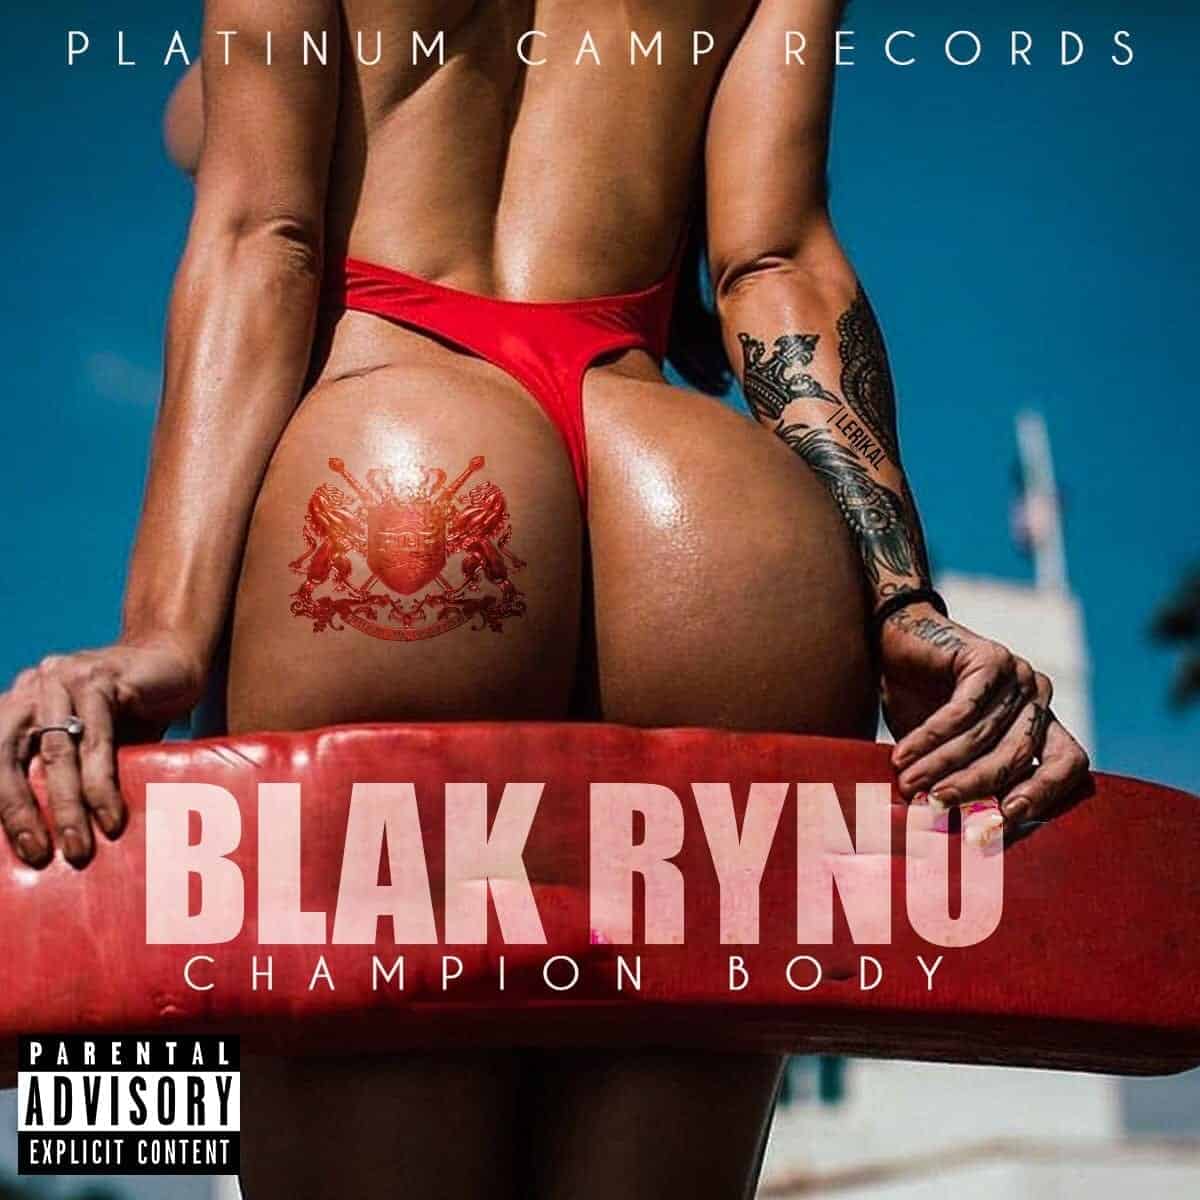 Blak Ryno - Champion Body - Platinum Camp Records